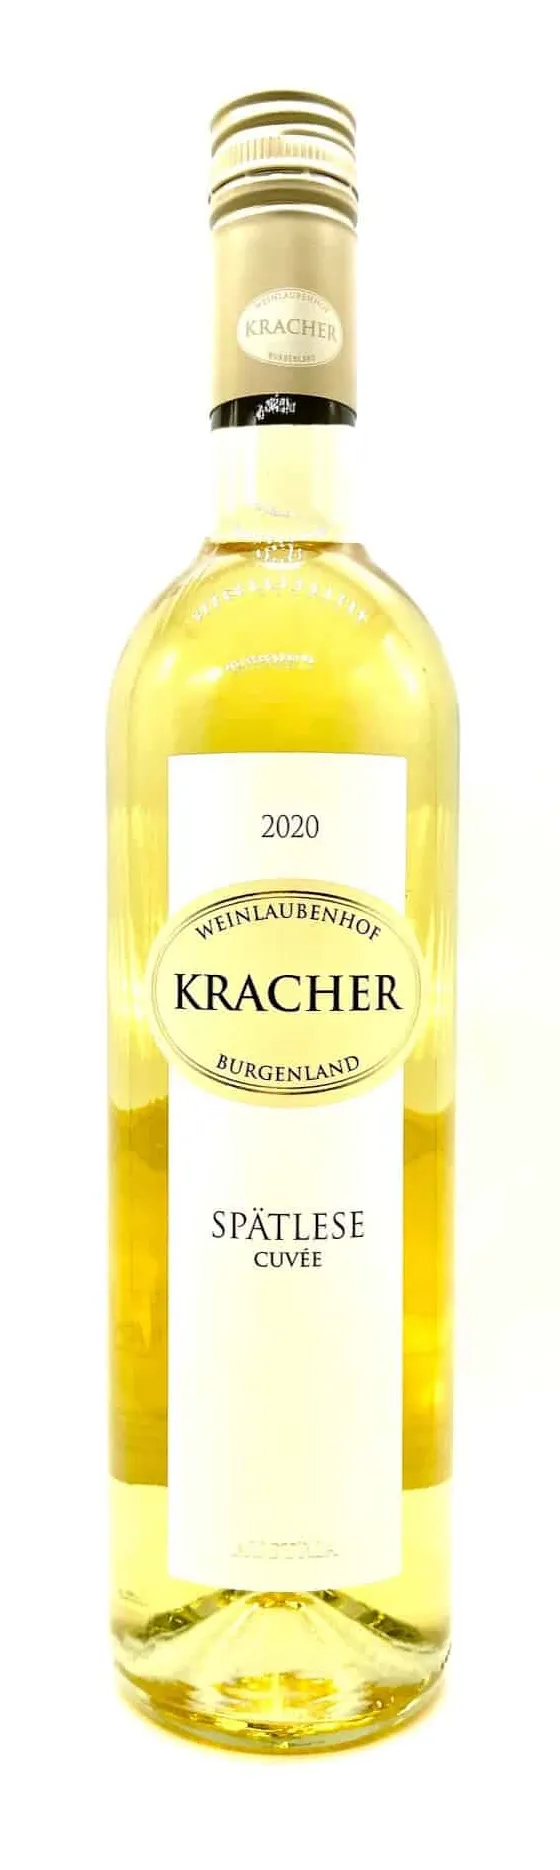 Bottle of Kracher Cuvée Spätlese from search results